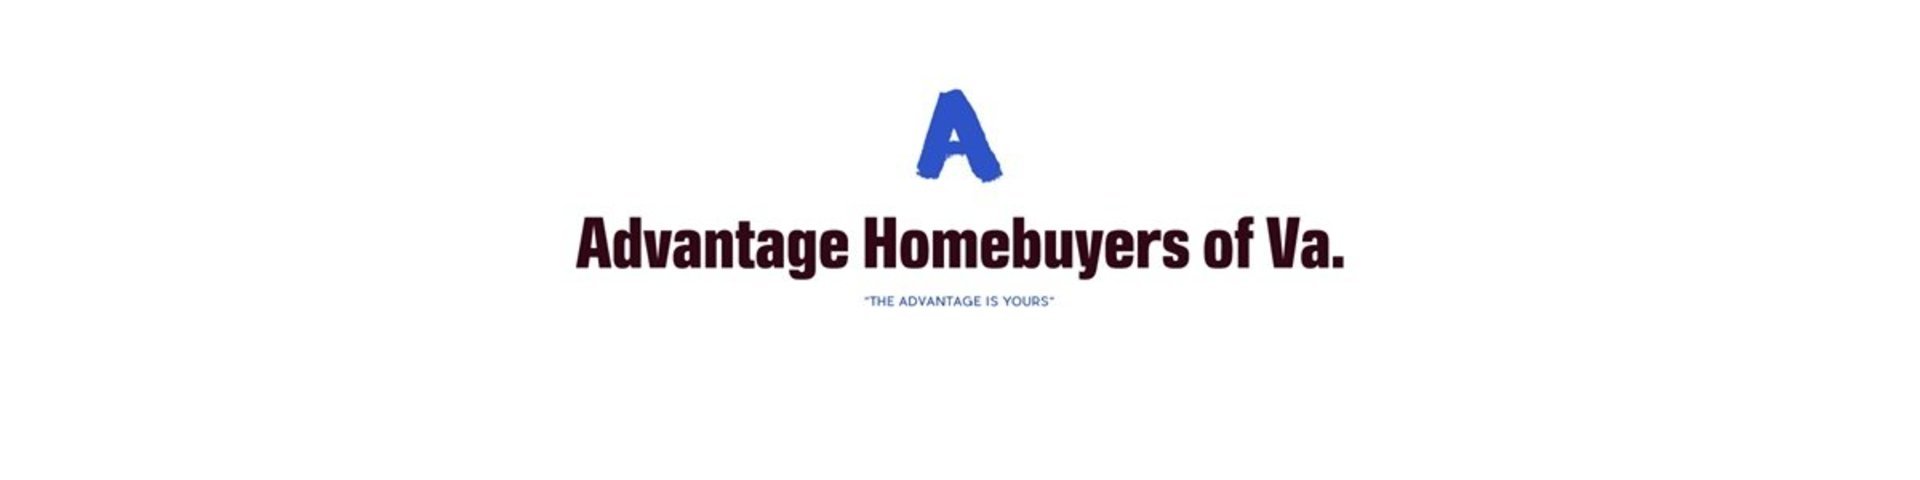 Advantage Homebuyers of Va